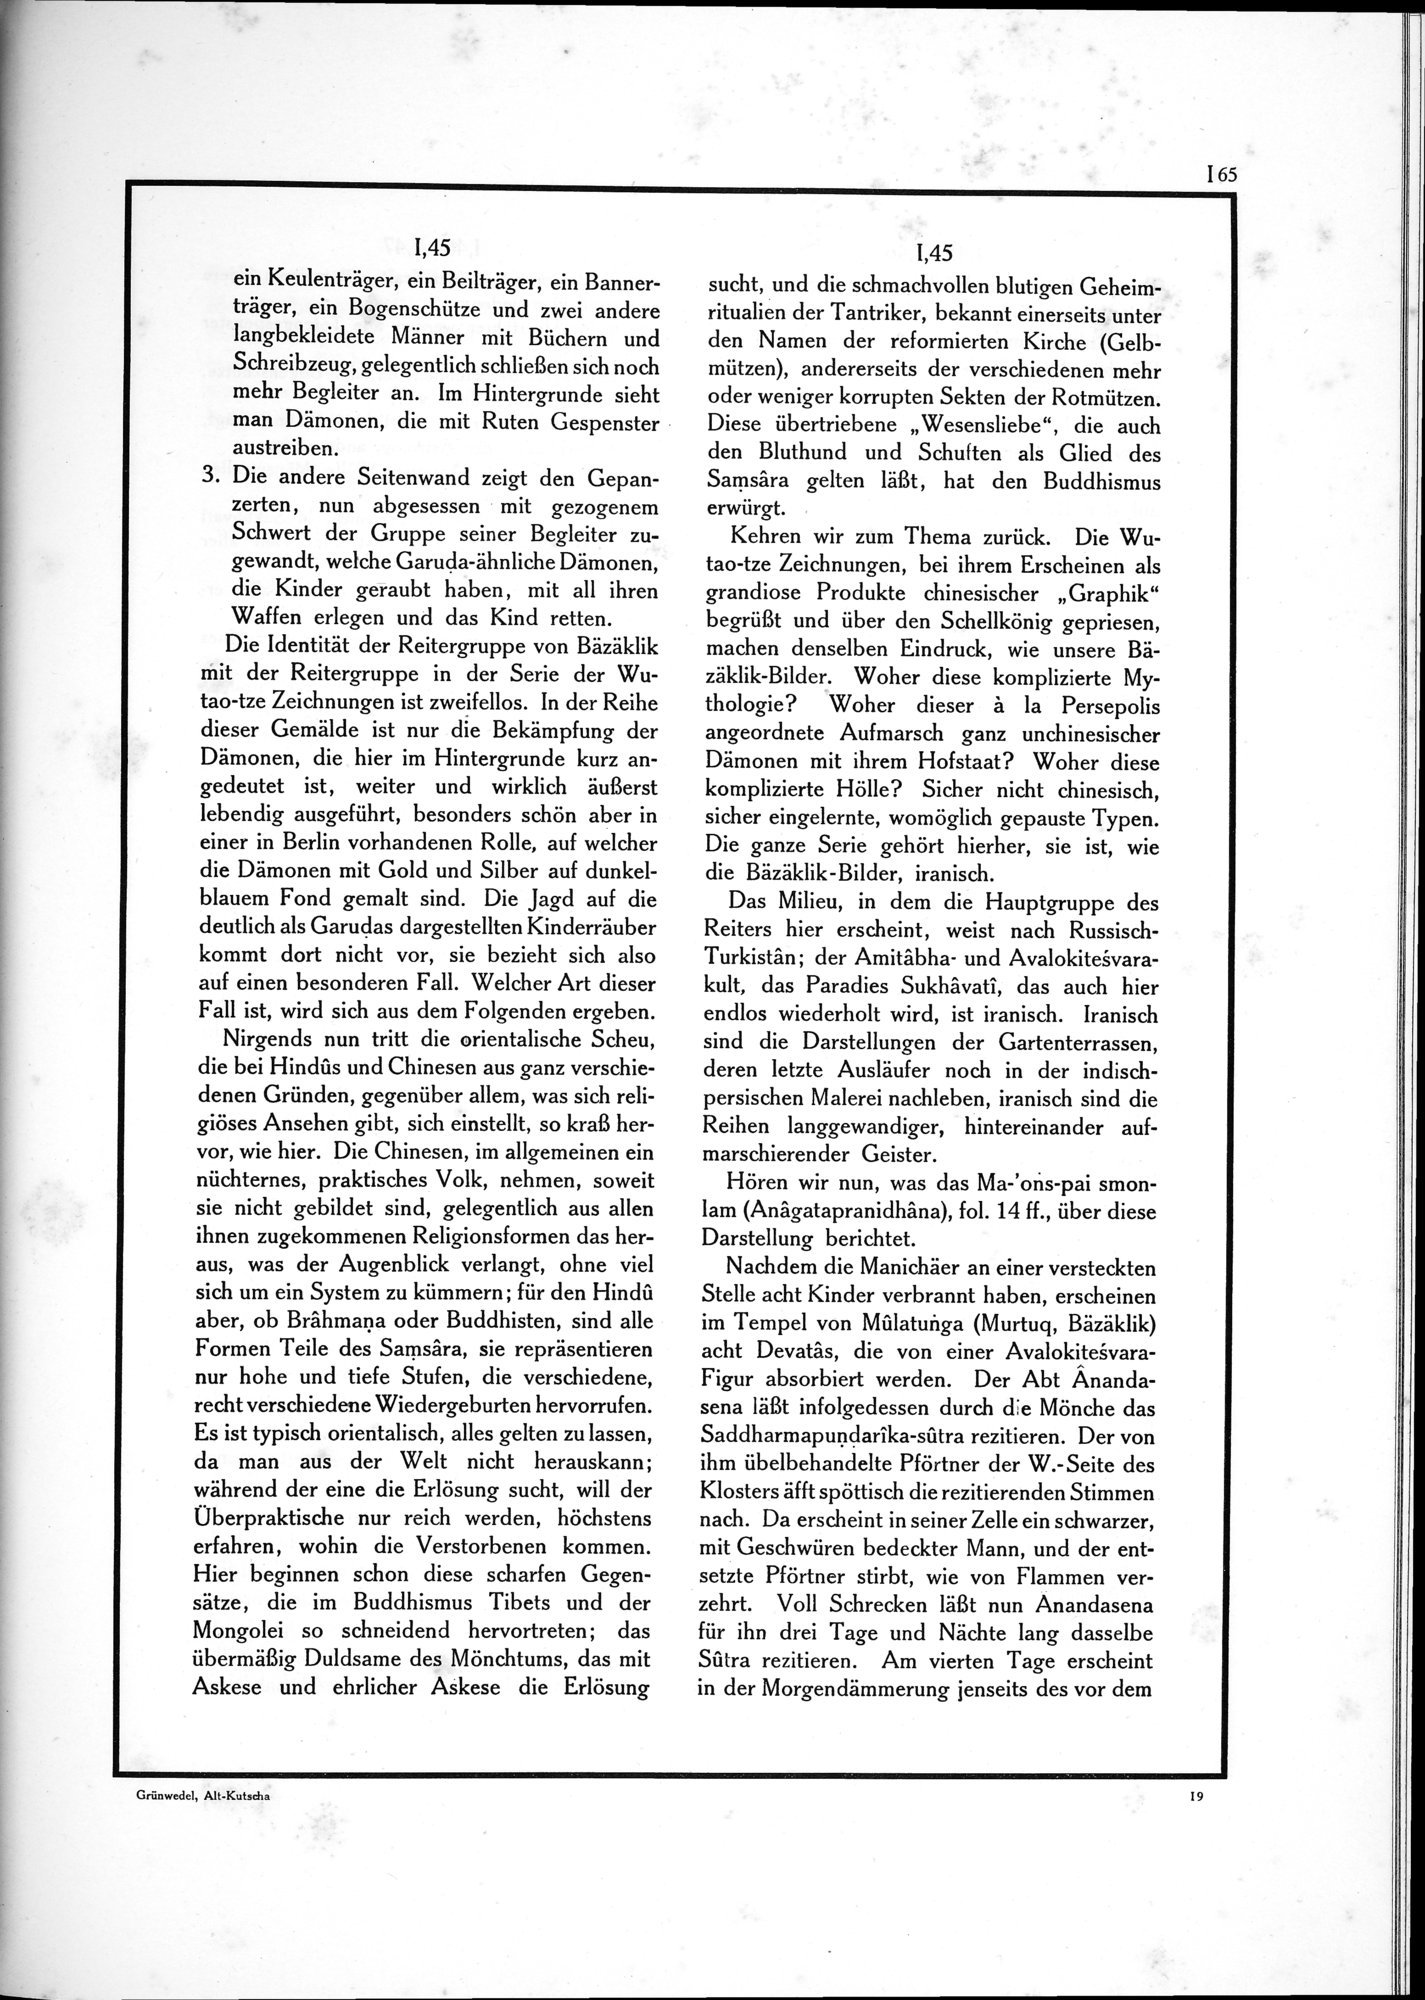 Alt-Kutscha : vol.1 / Page 77 (Grayscale High Resolution Image)